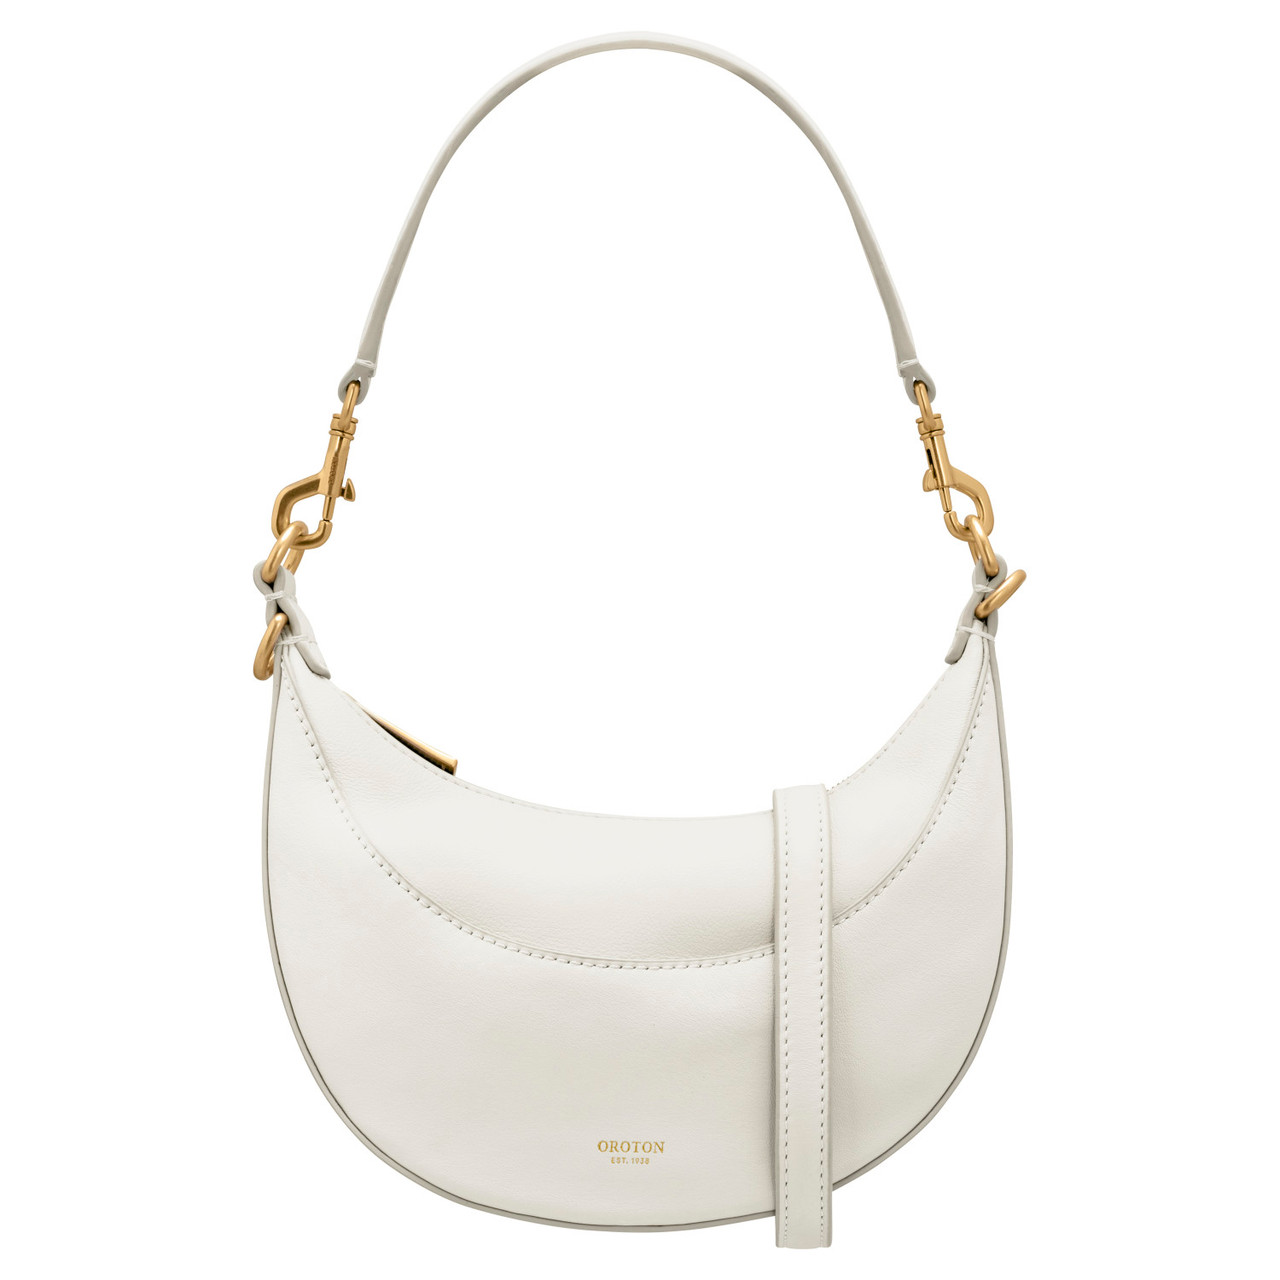 OROTON Signature Essential Tote Handbag - MUST HAVE & BRAND NEW | eBay